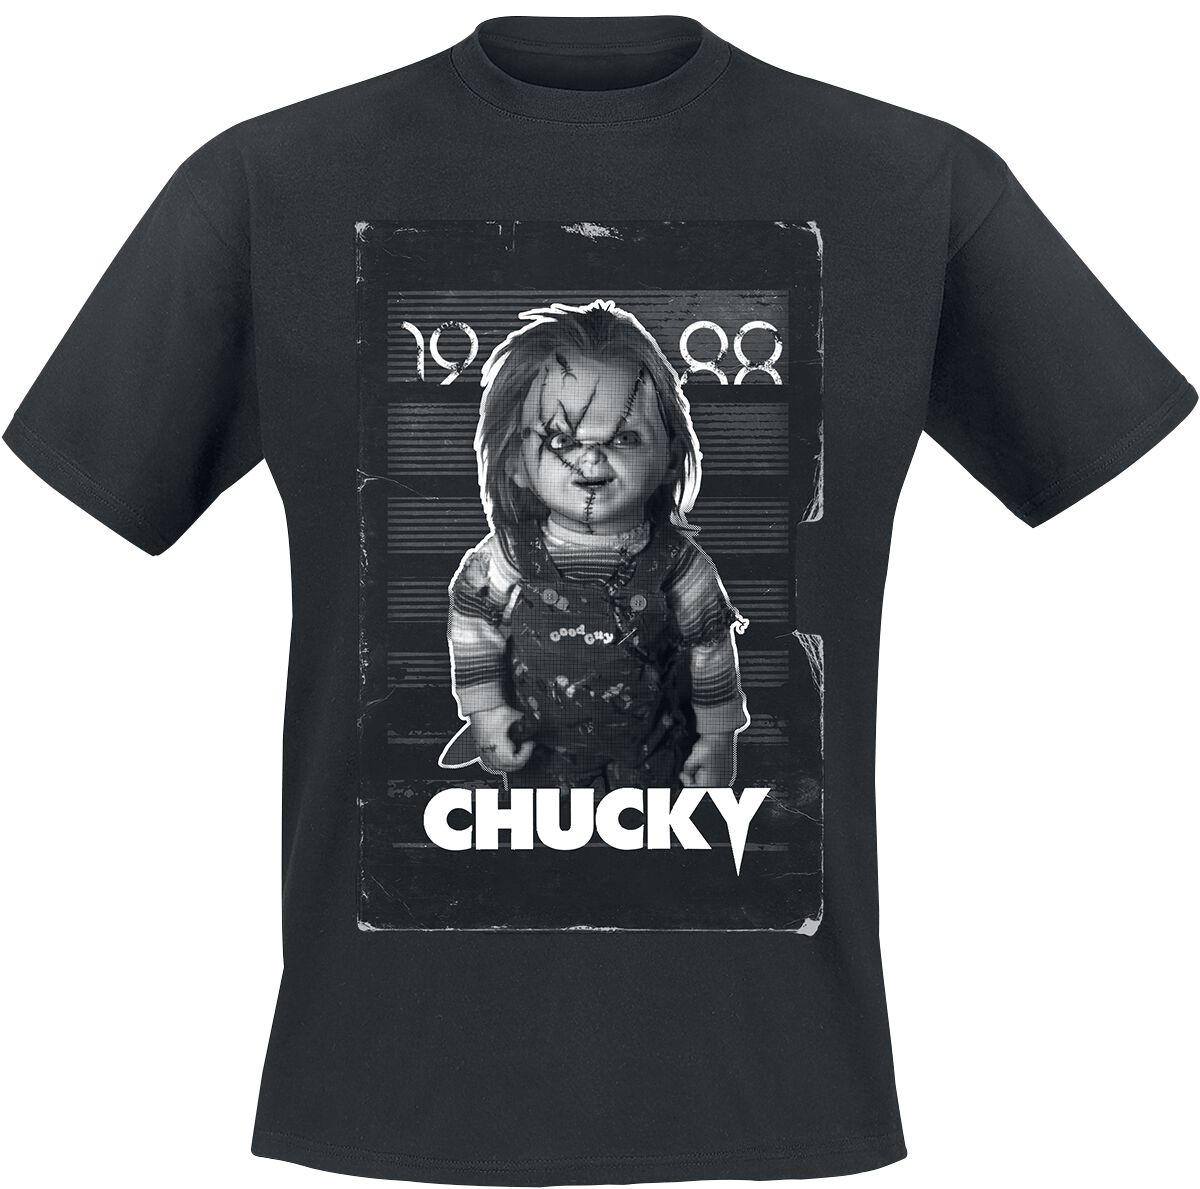 Chucky VHS Cover T-Shirt schwarz in S